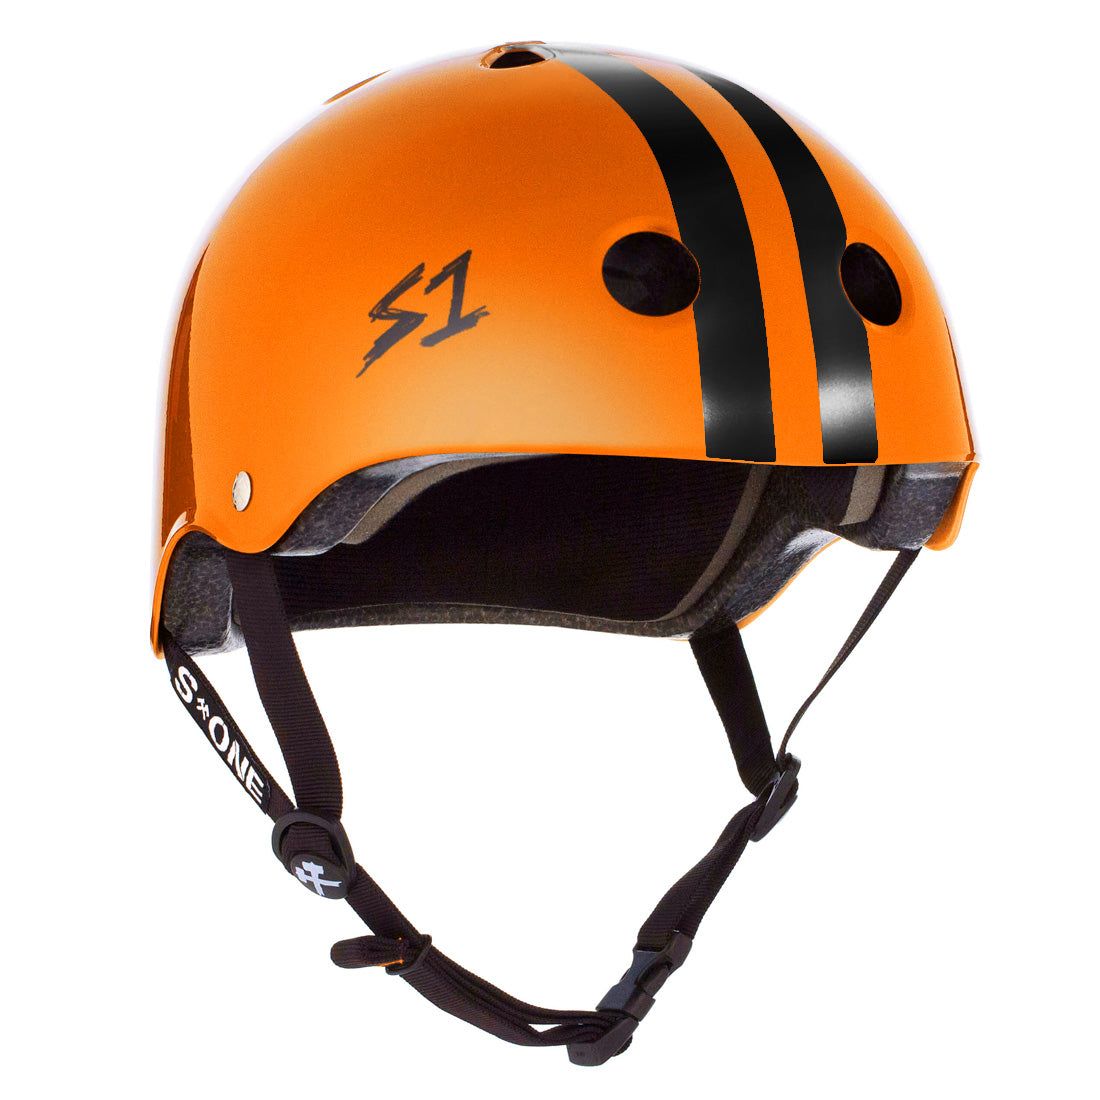 S-One Lifer Helmet - Bright Orange/Black Stripes Helmets